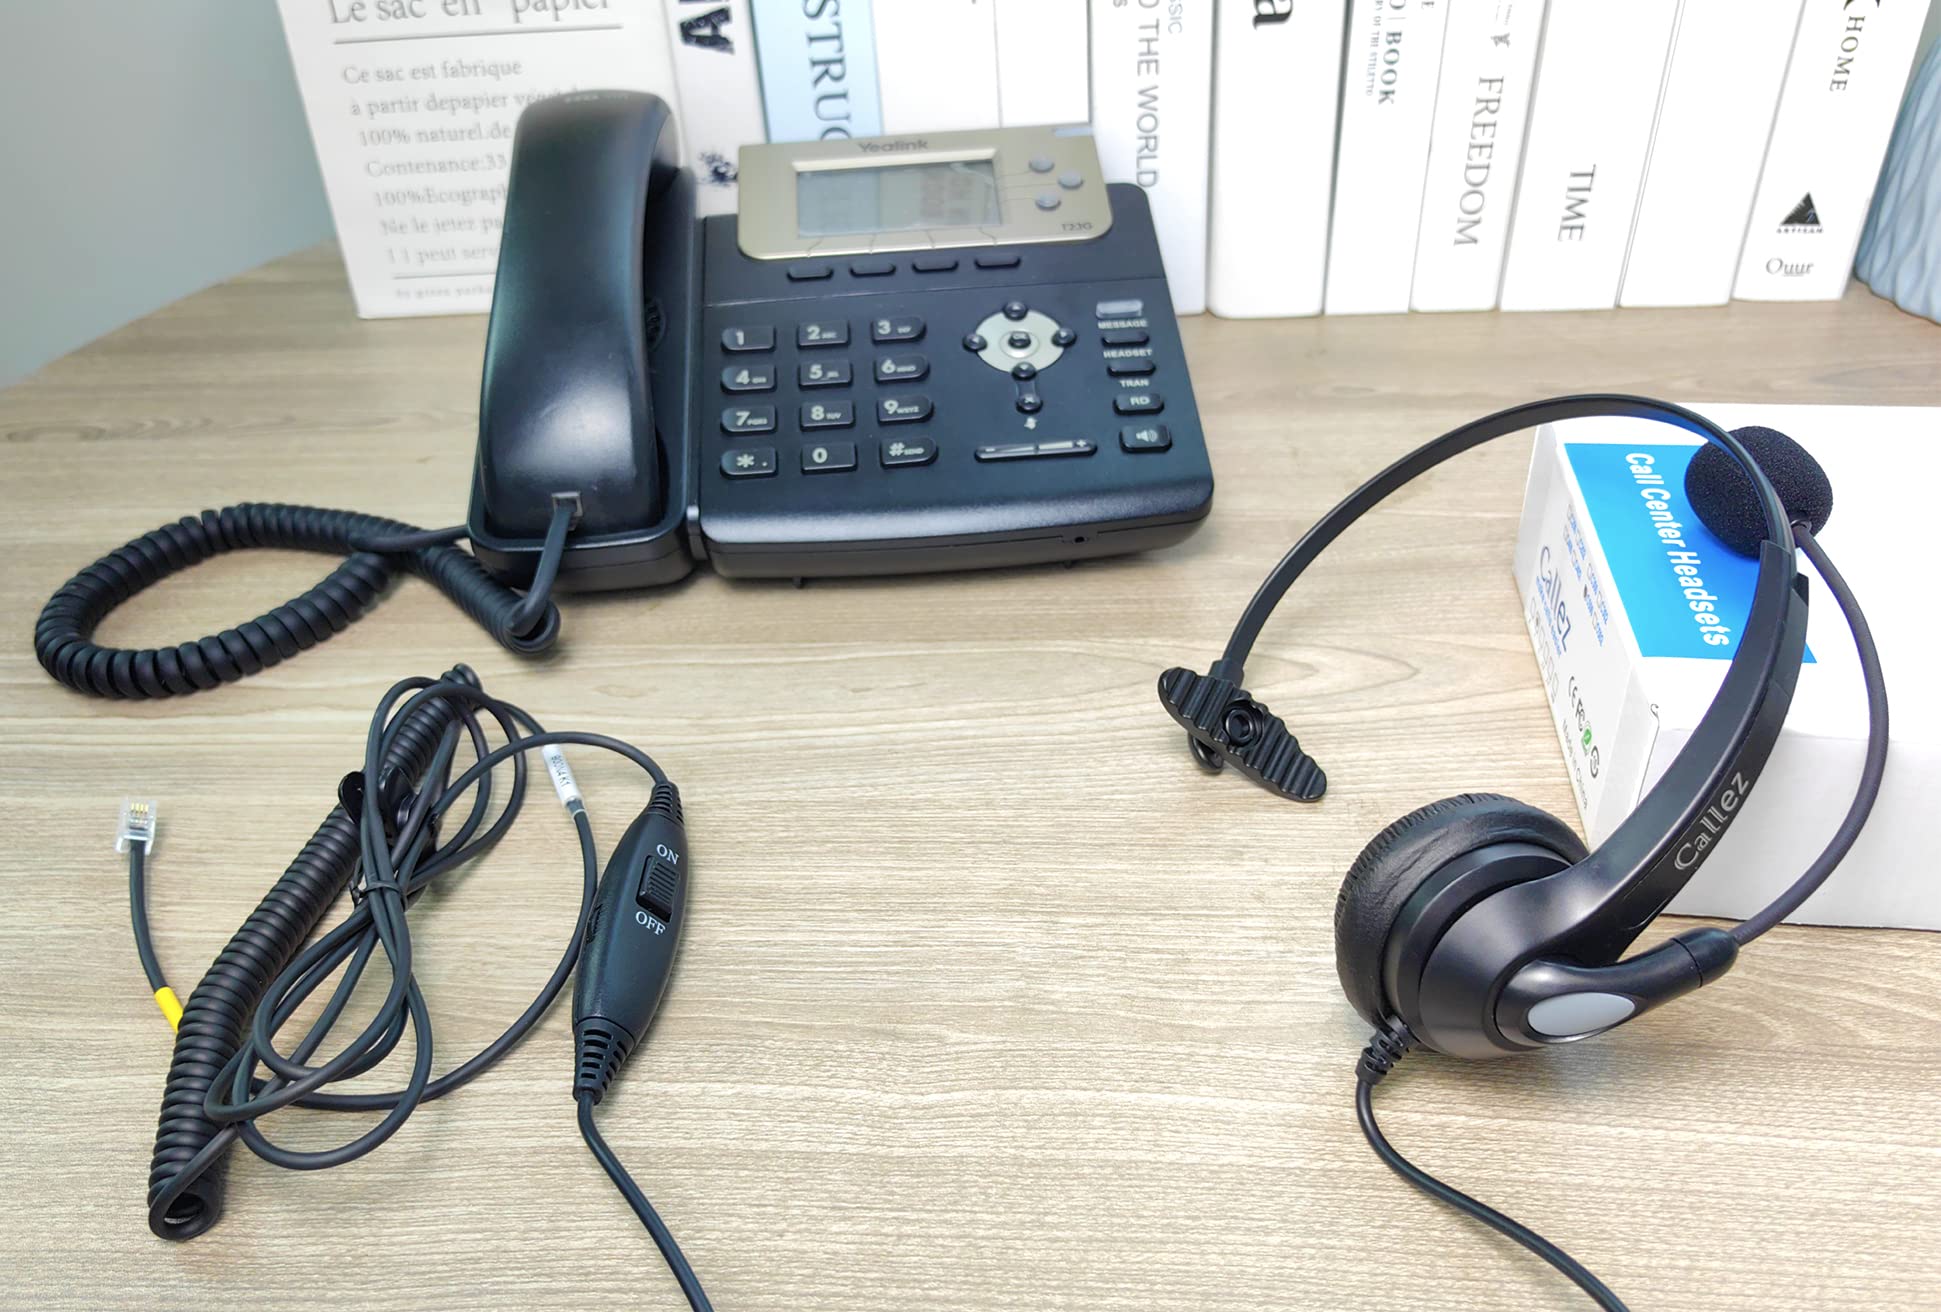 Callez RJ9 Phone Headset Office Telephone Headset with Microphone Noise Cancelling for Yealink T23G T33G T40G T46G T46S T48S T46U T48U T53W T57W Grandstream GXP2135 GXP2160 GXP2170 Avaya Panasonic